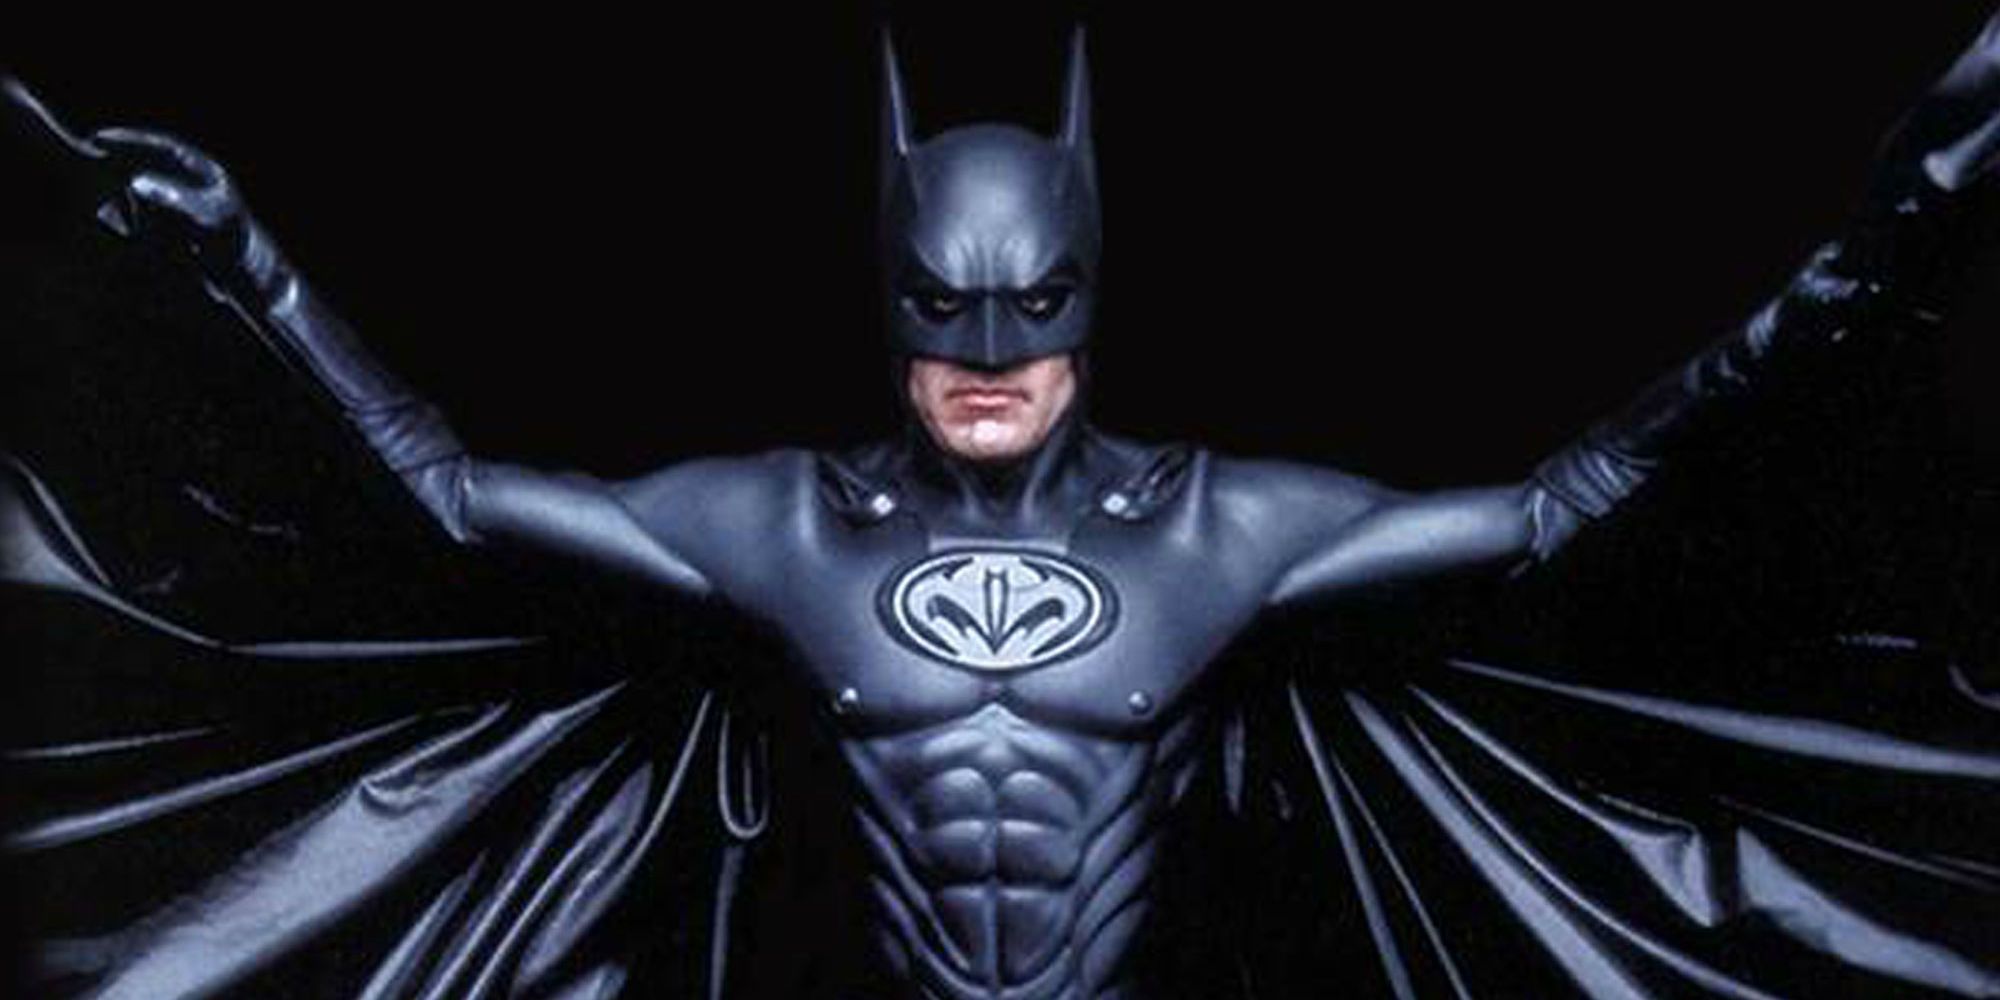 Batman & Robin Had The Biggest Influence On George Clooney's Career